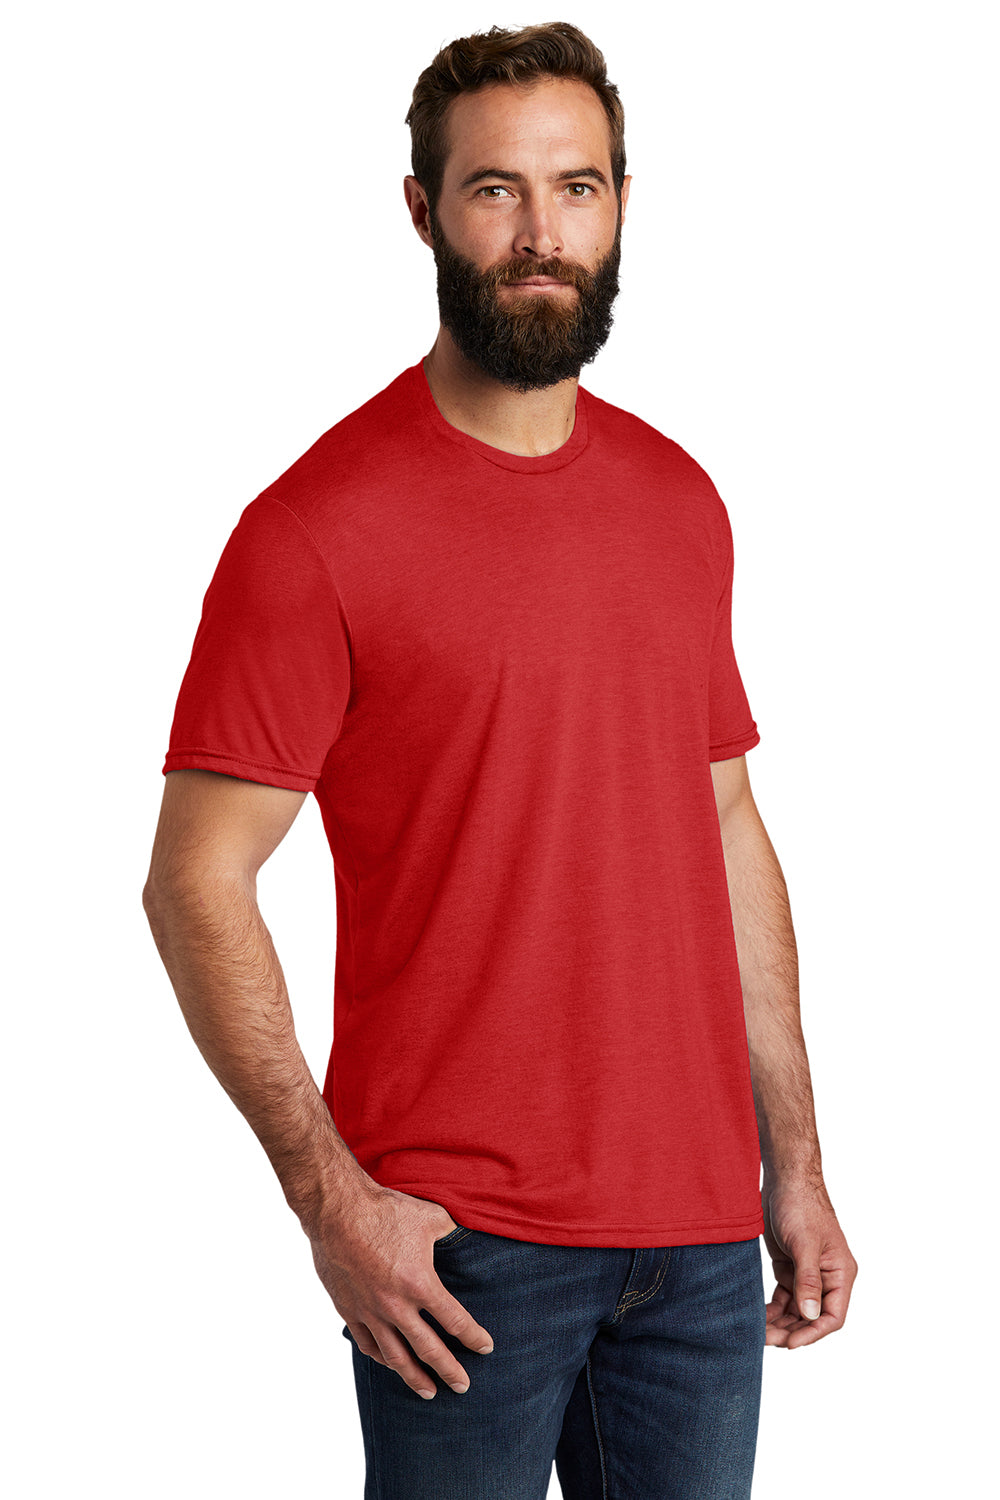 Allmade AL2004 Mens Short Sleeve Crewneck T-Shirt Rise Up Red Model 3Q